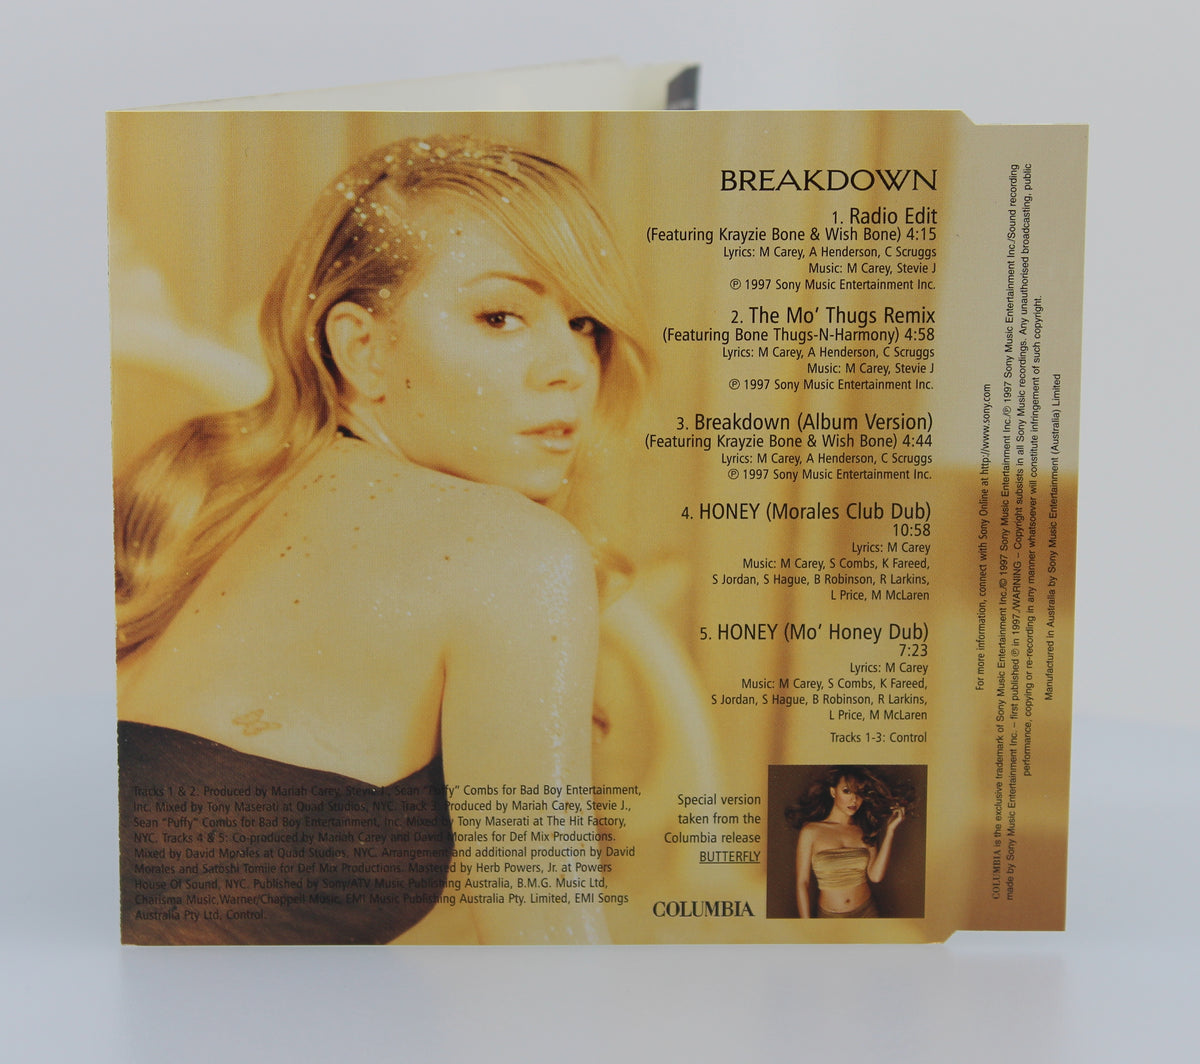 Mariah Carey Featuring Bone Thugs-N-Harmony – Breakdown, CD Maxi, Australia 1997